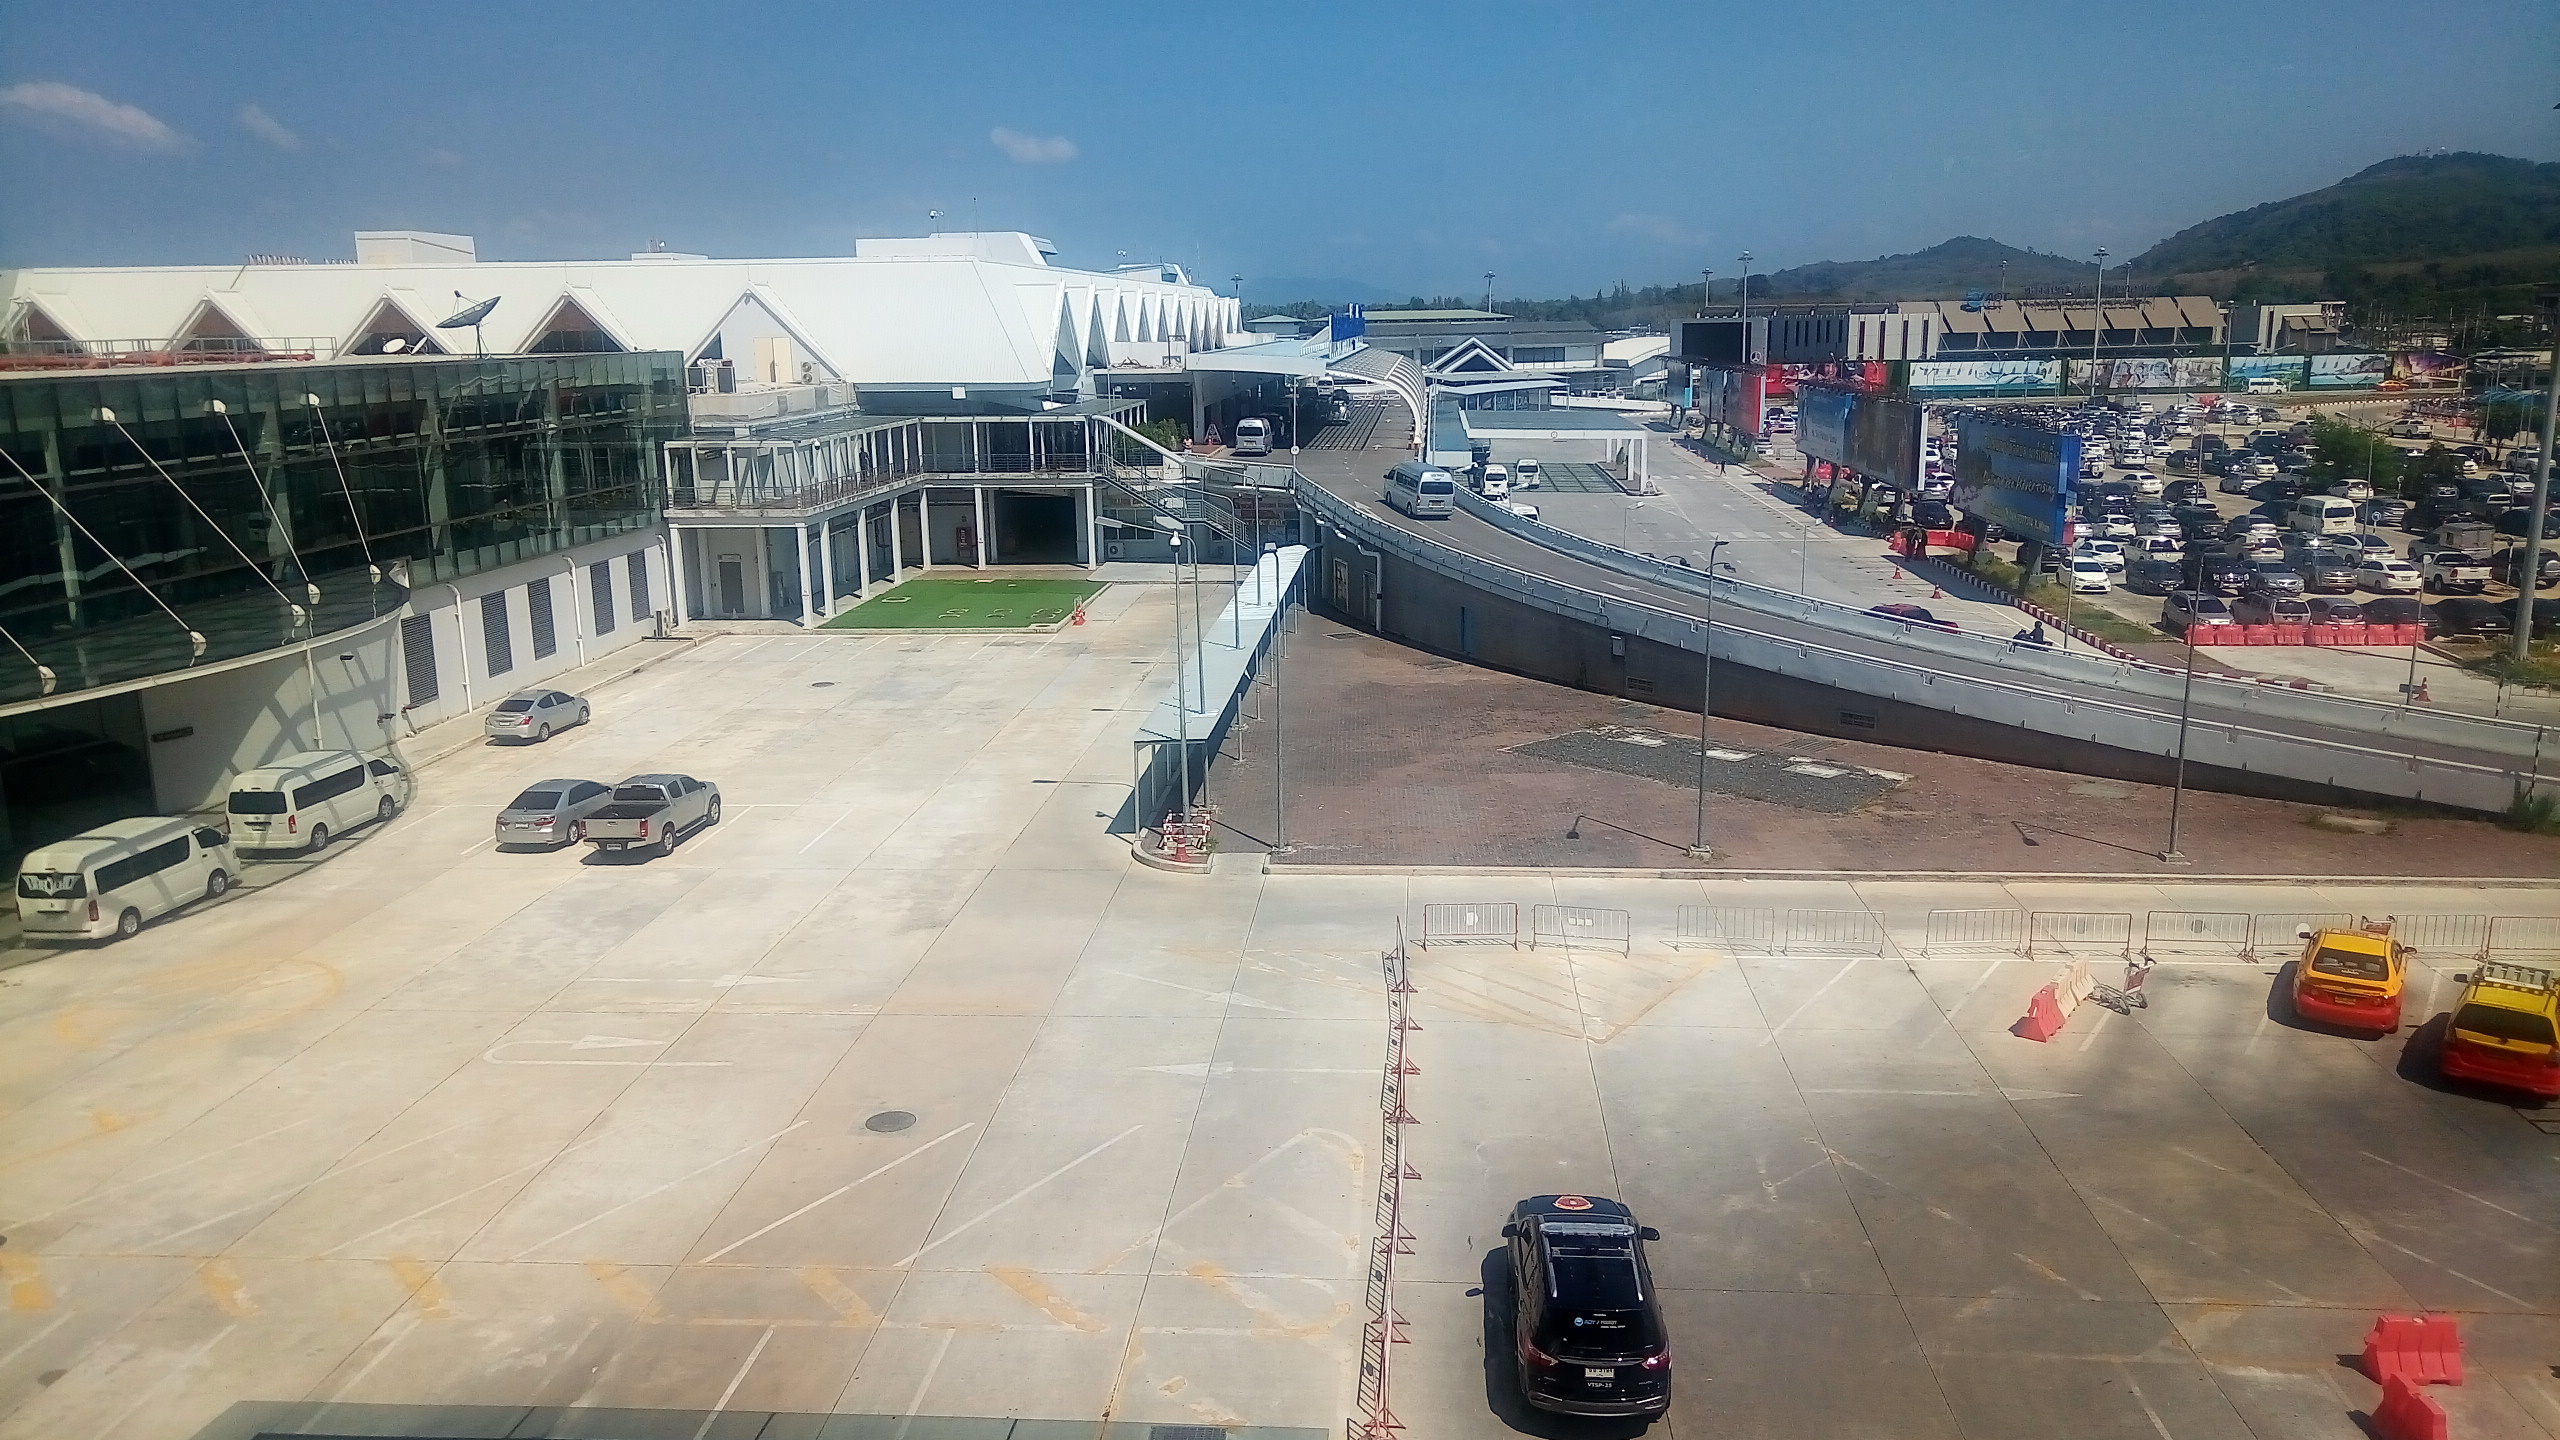 Phuket airport parking